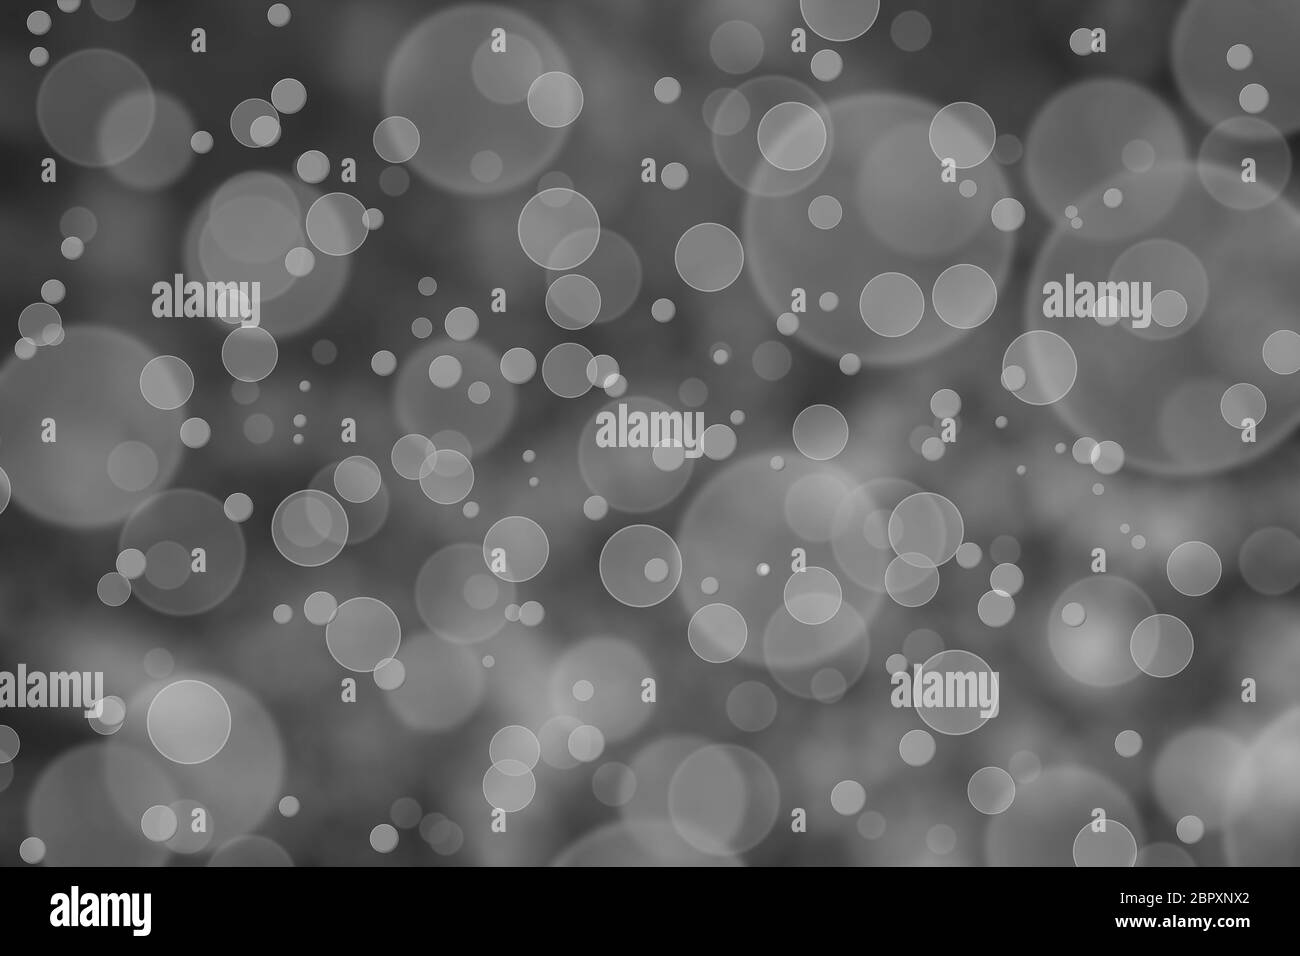 Bokeh effect background design background Stock Photo - Alamy